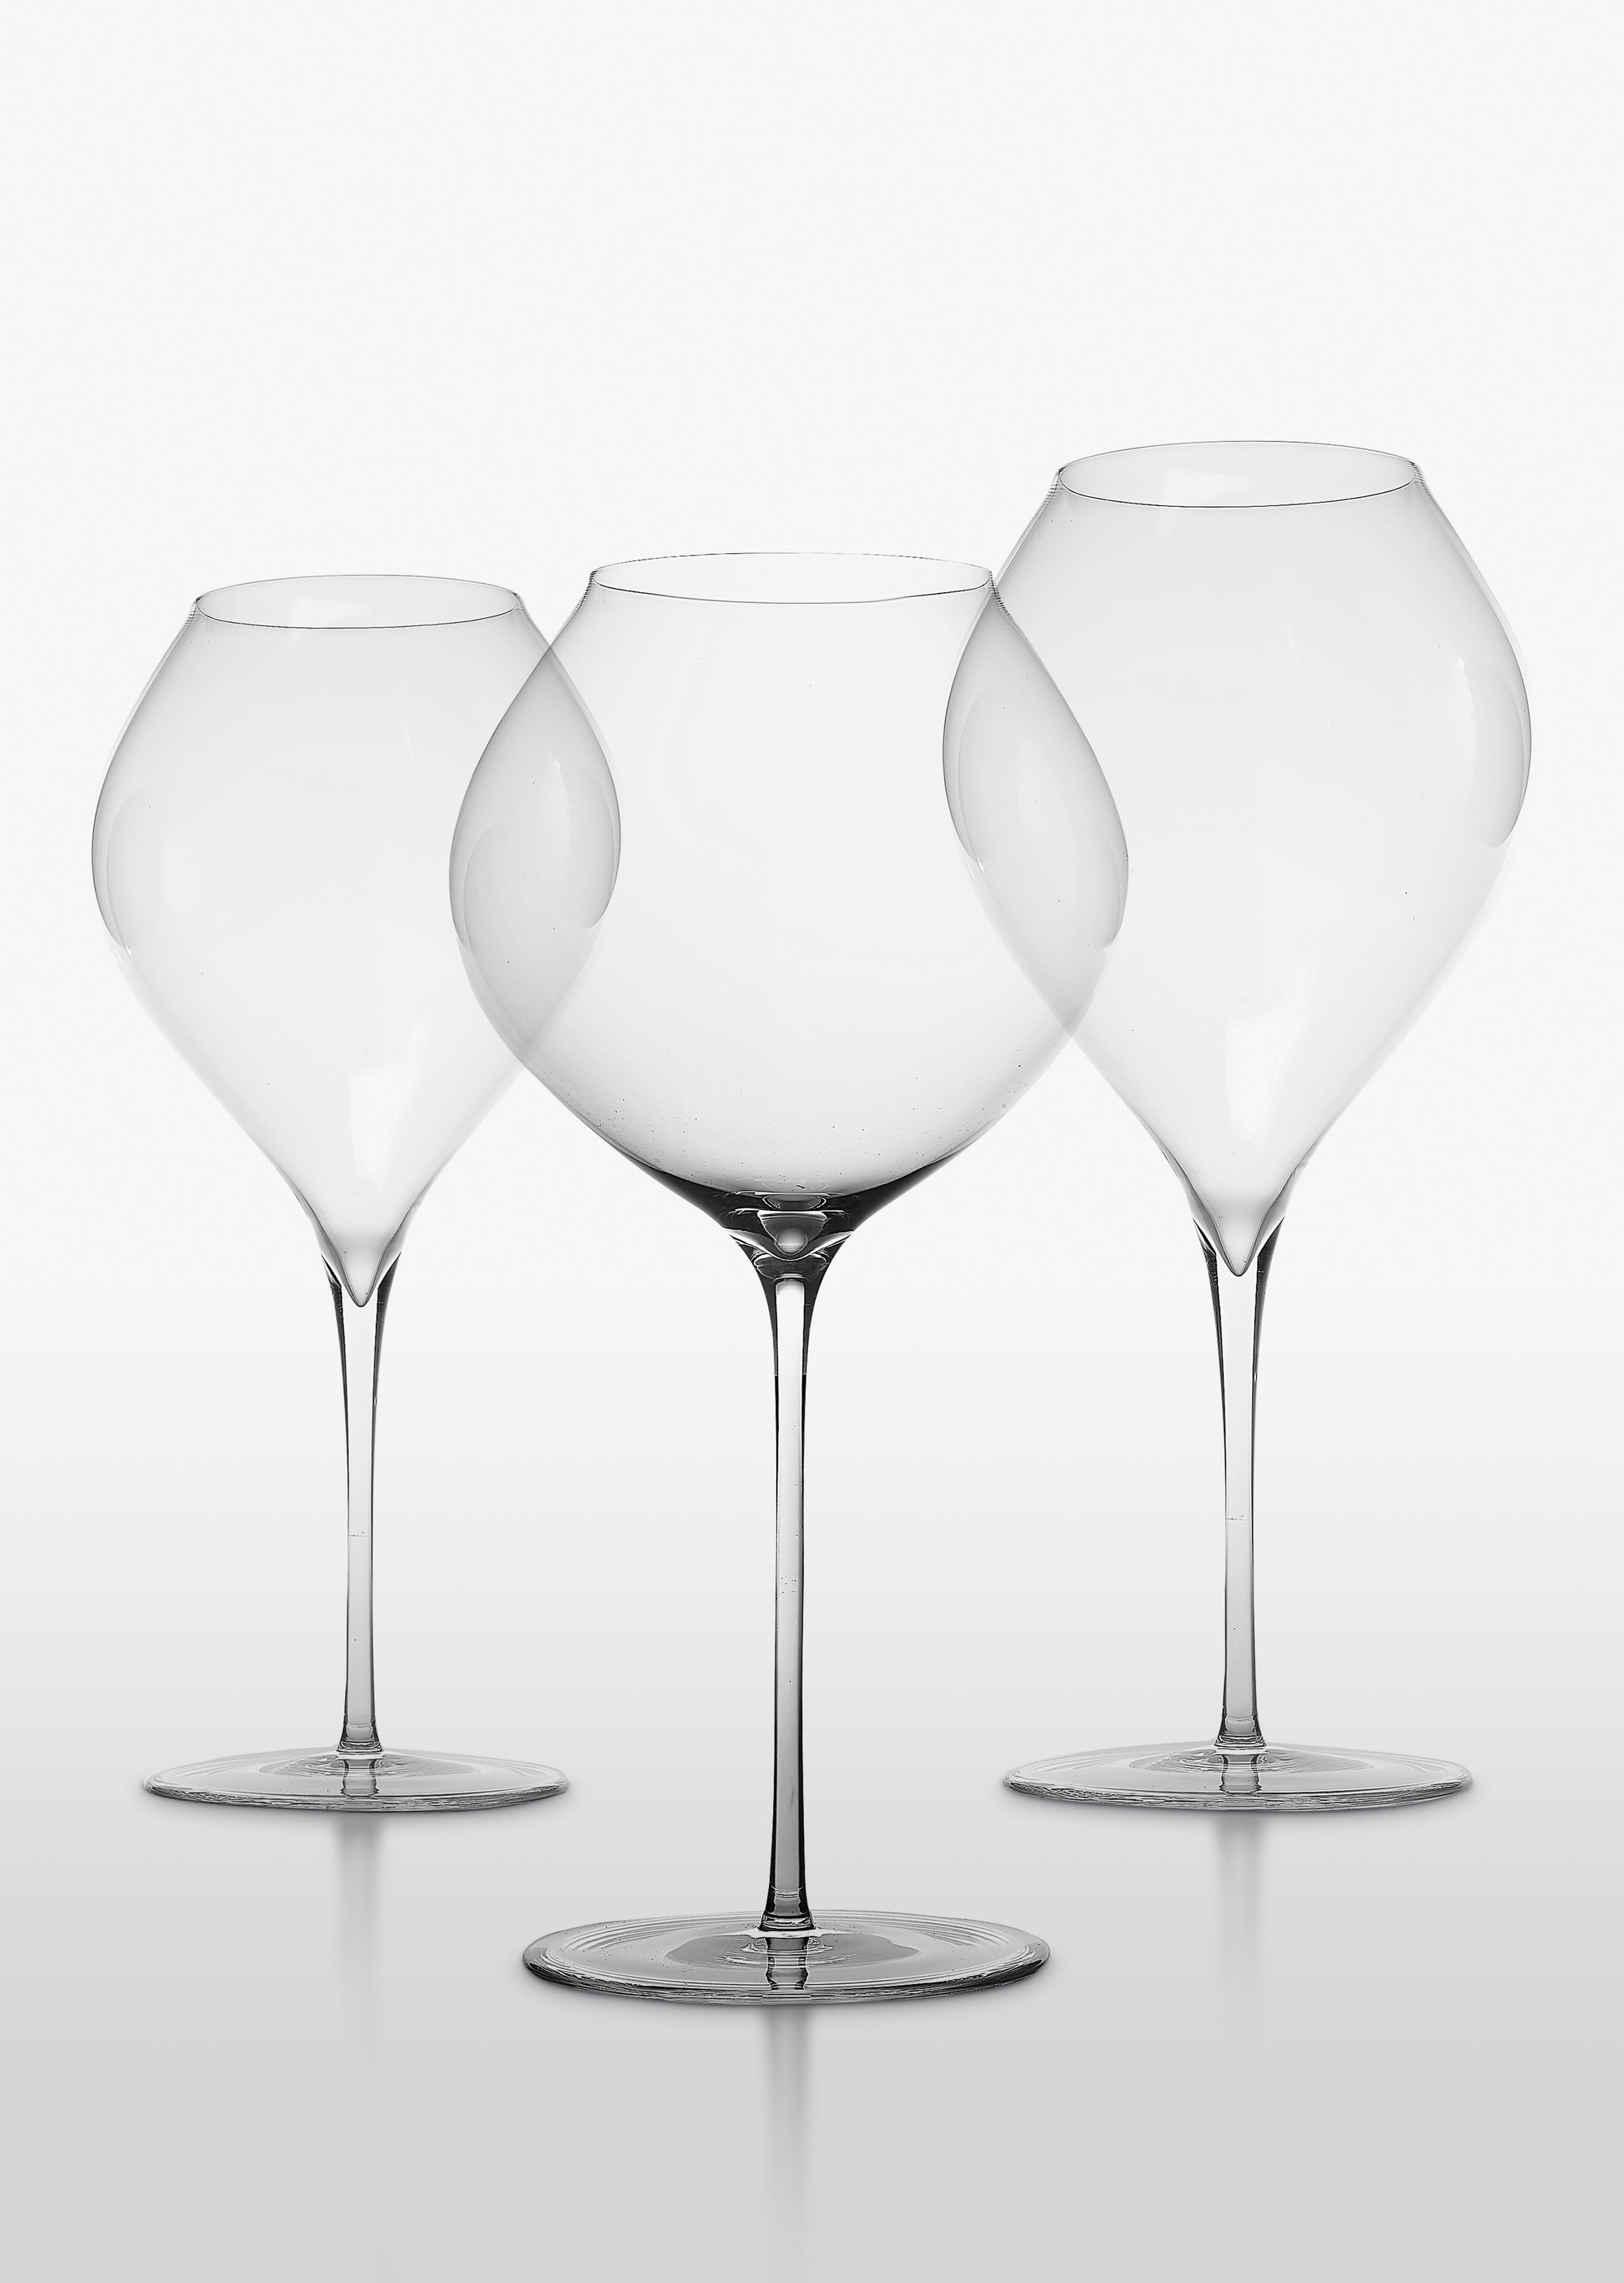 ULTRALIGHT White Wine Glass (Gift Box of 2)